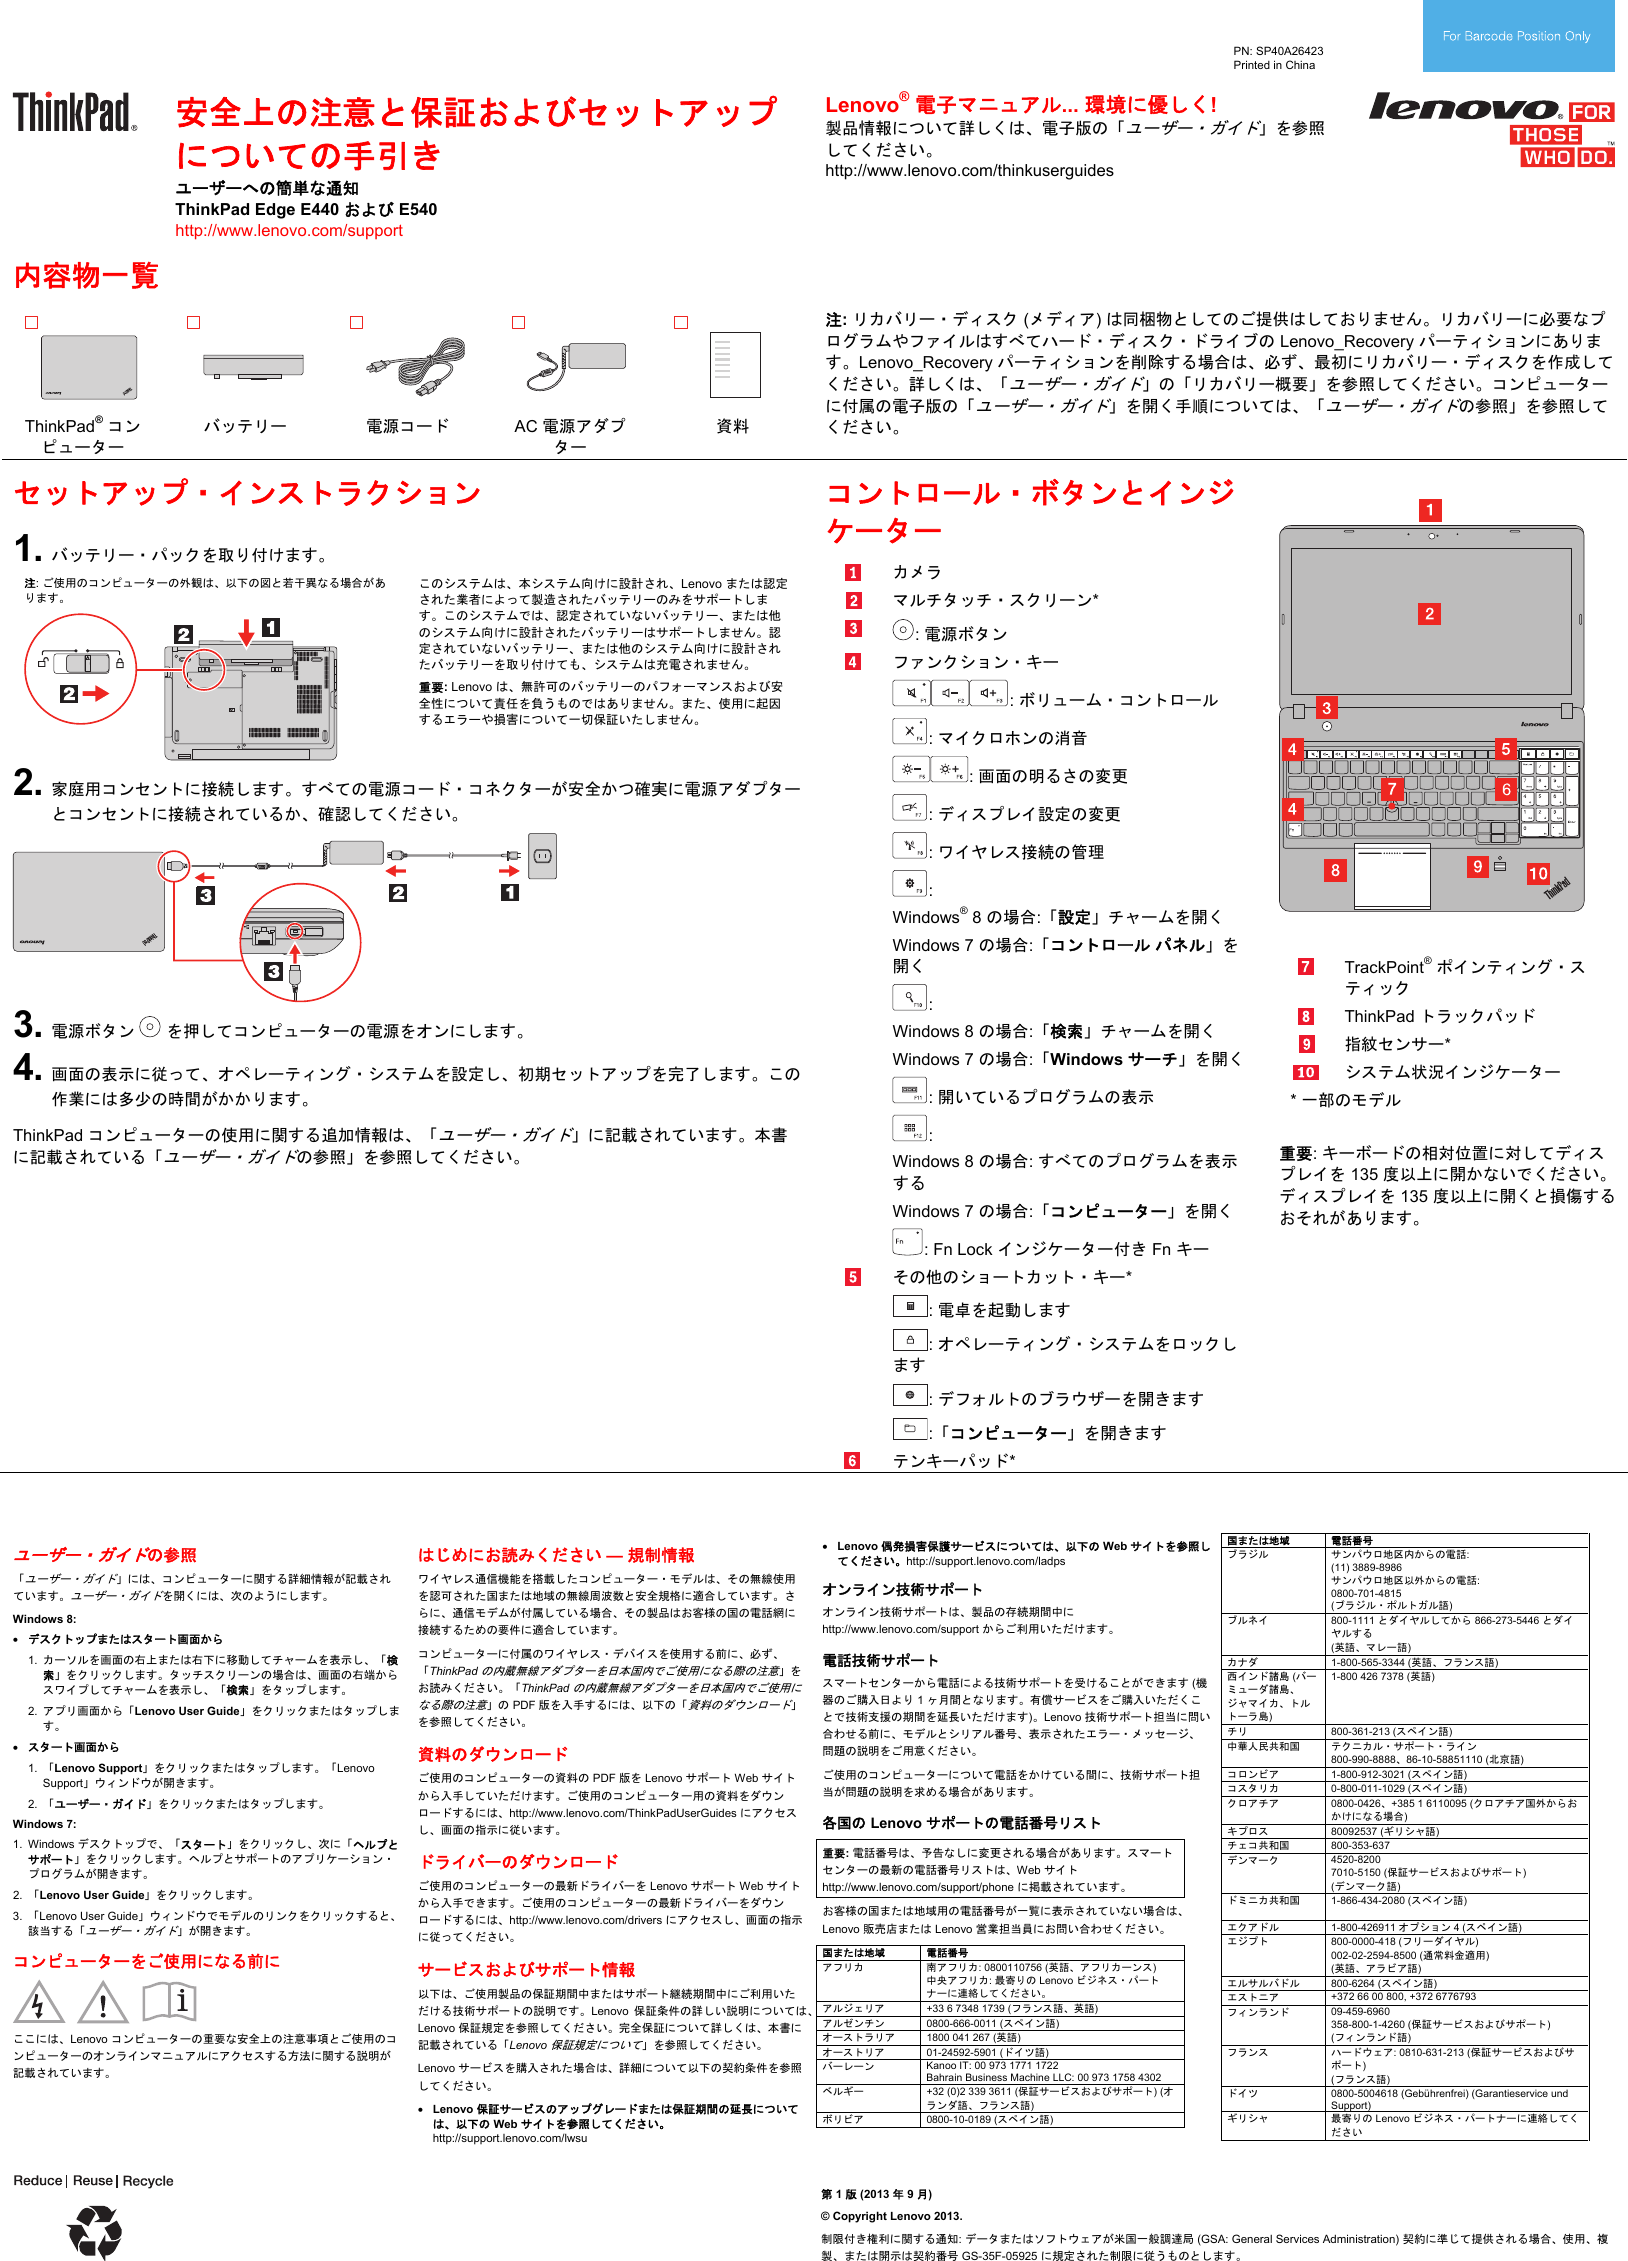 lenovo thinkpad e540 technical manual